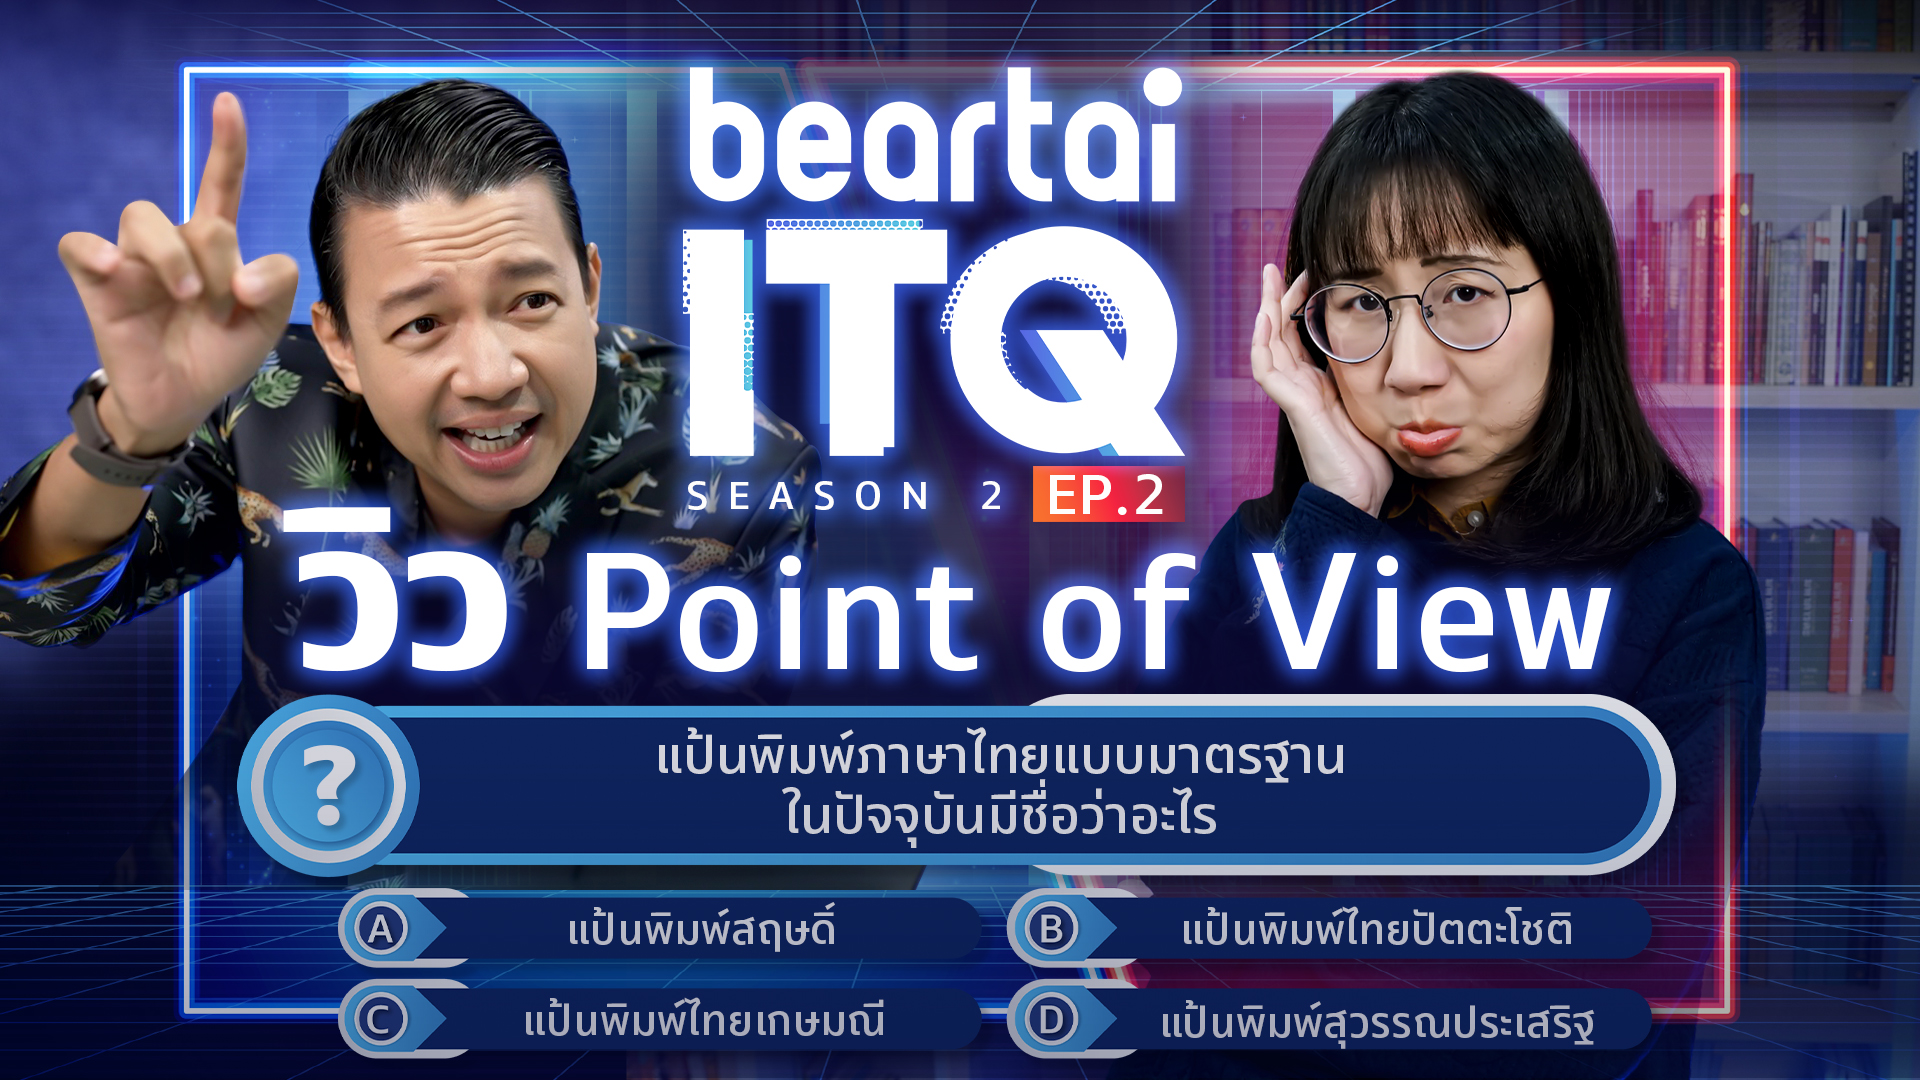 beartai ITQ season 2 ท้า ‘วิว Point of View’ ประลองไอคิวด้วยคำถามไอที